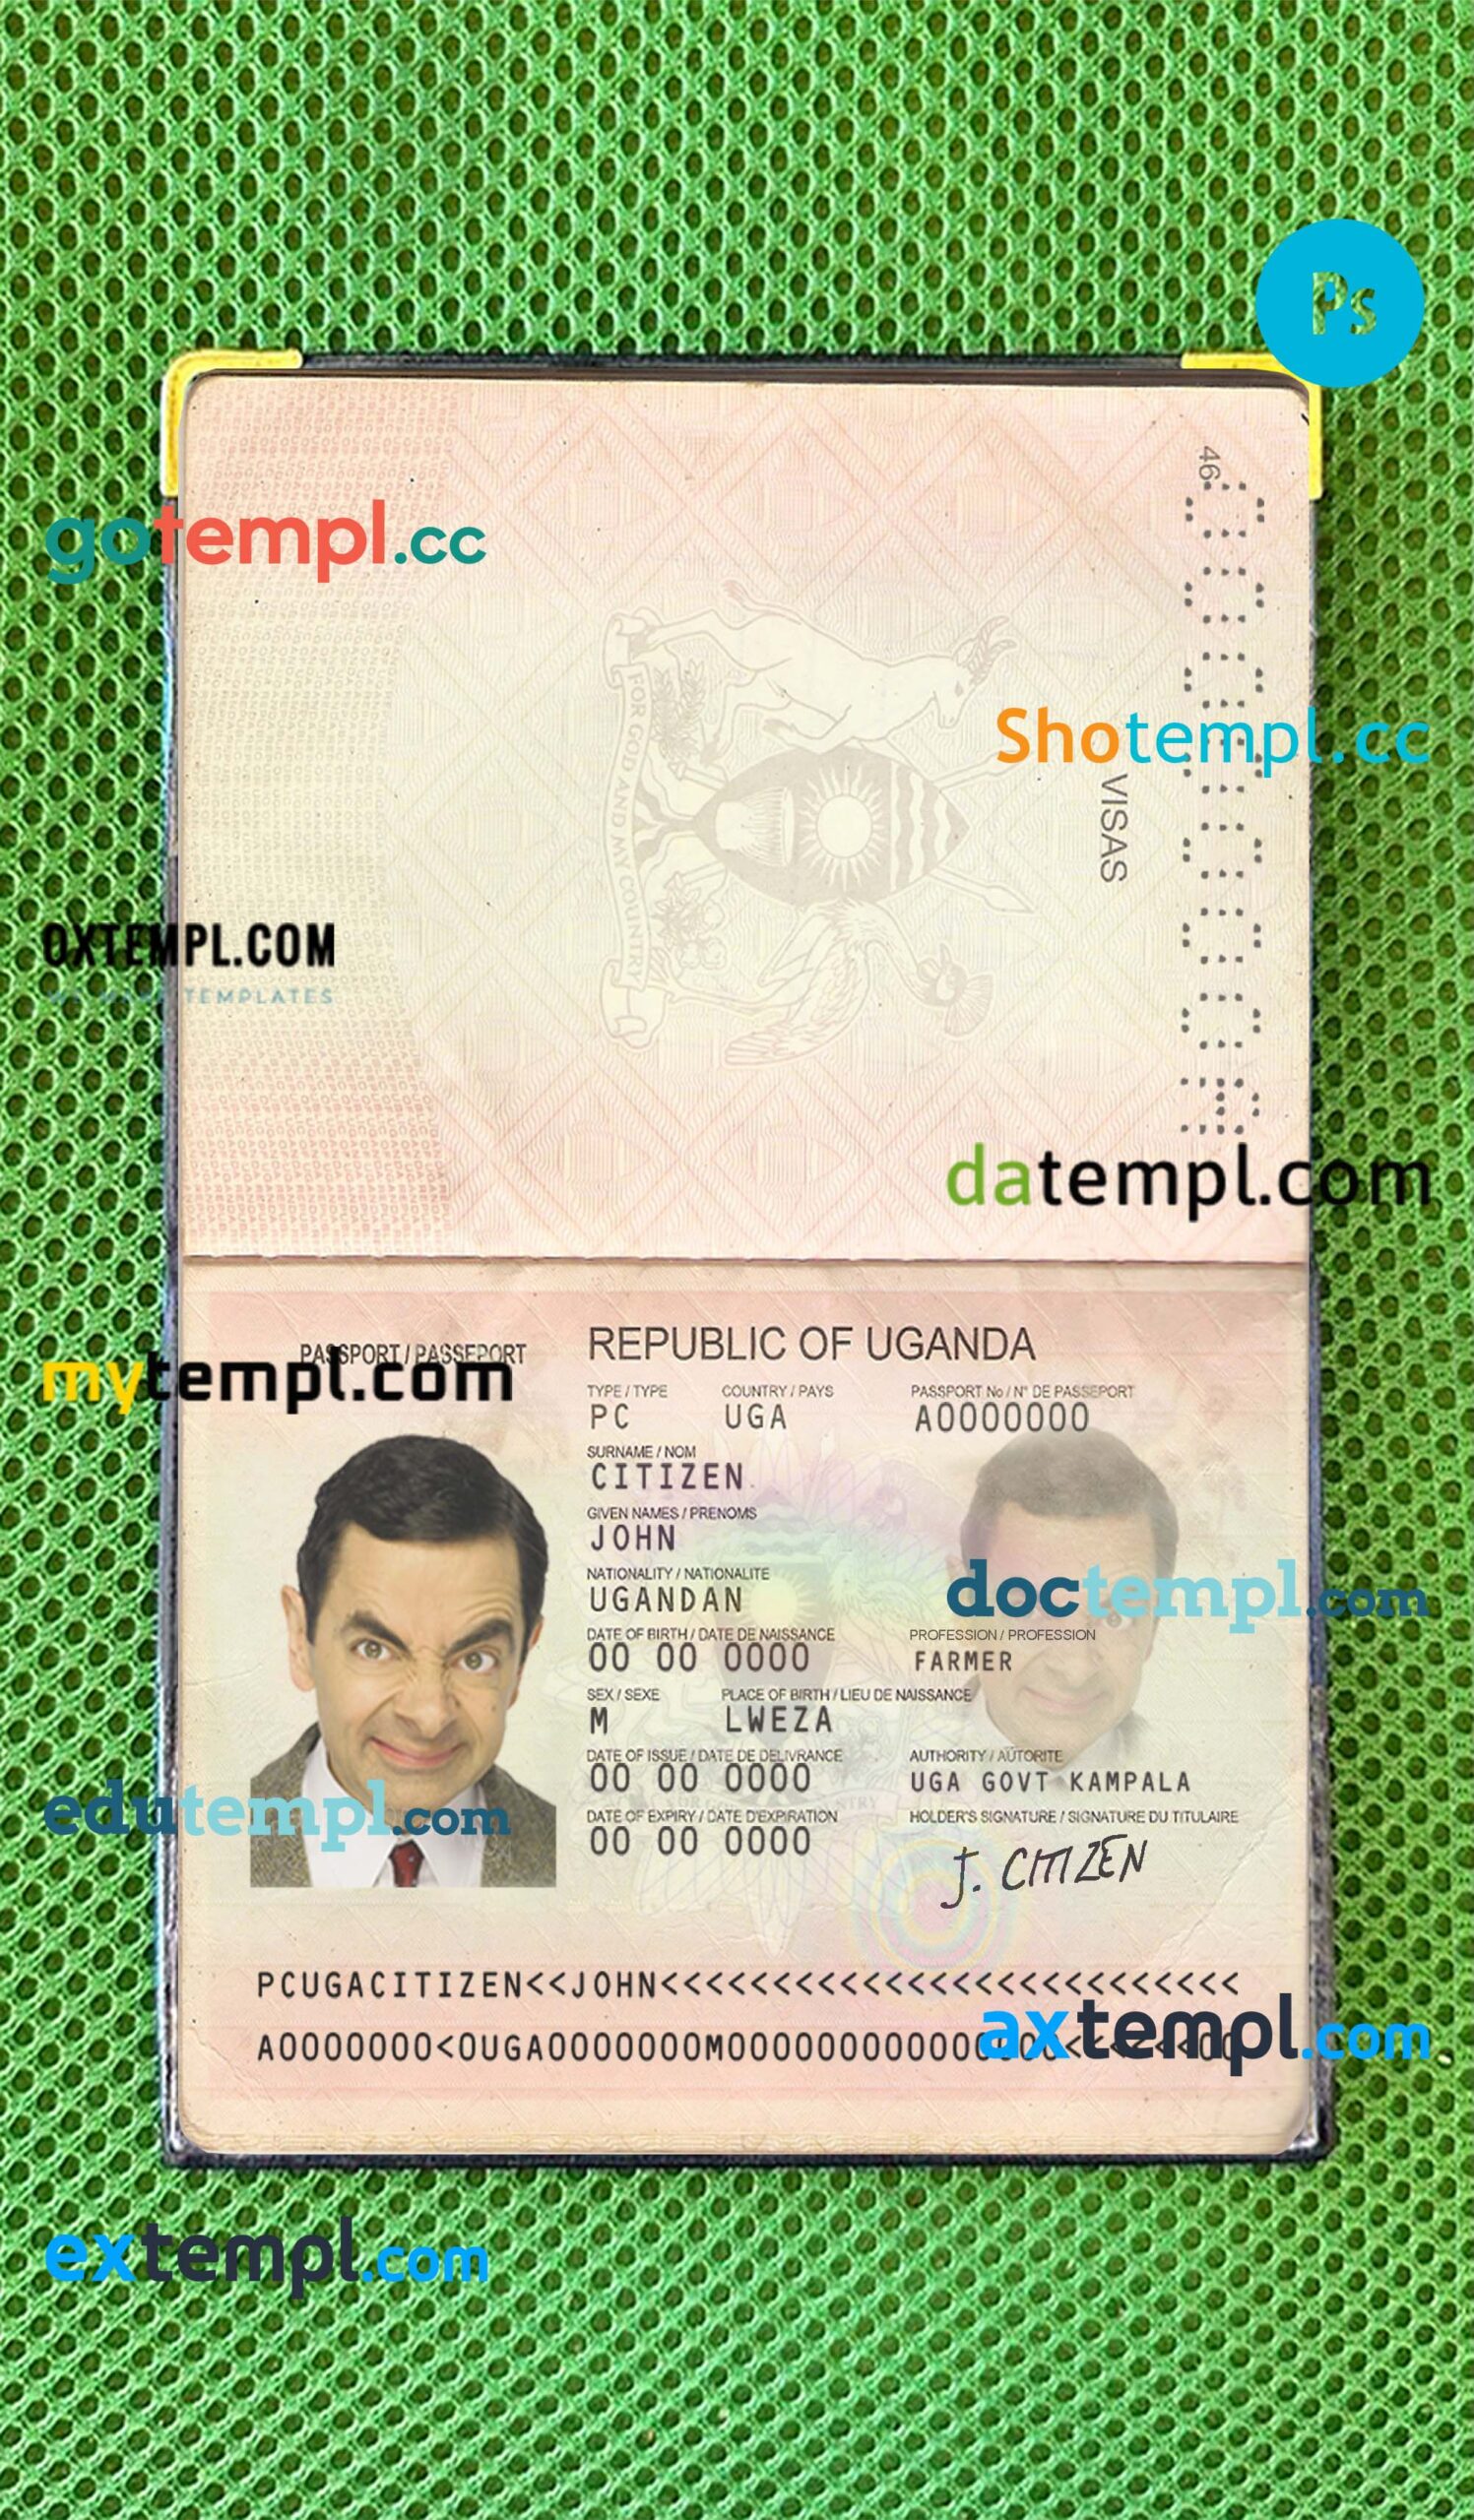 Barbados Butterfield bank visa card debit card template in PSD format, fully editable